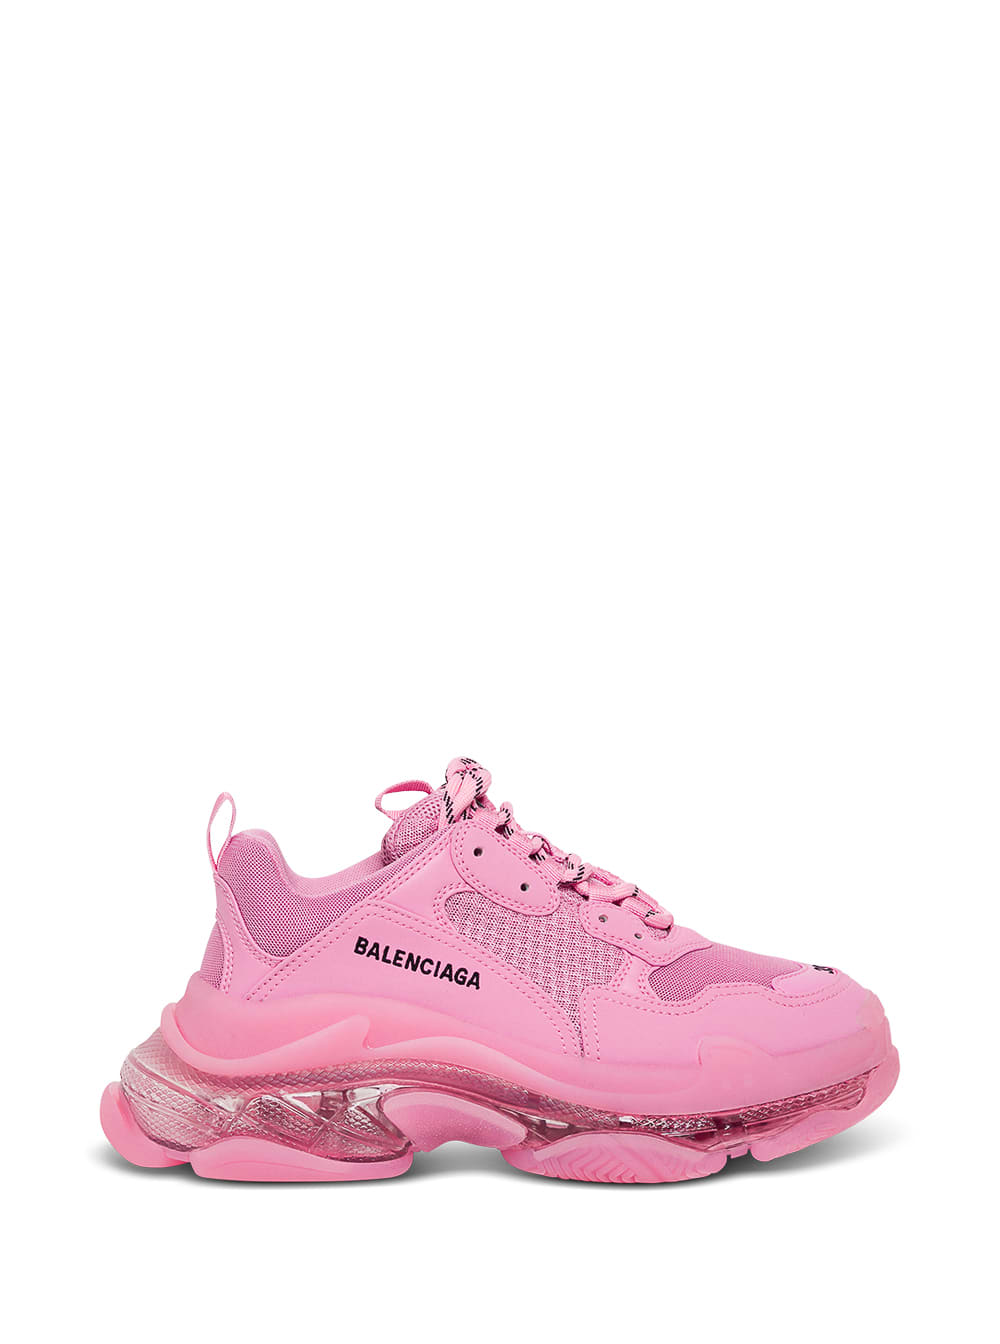 Balenciaga Triple S Clear Sole Pink Sneakers